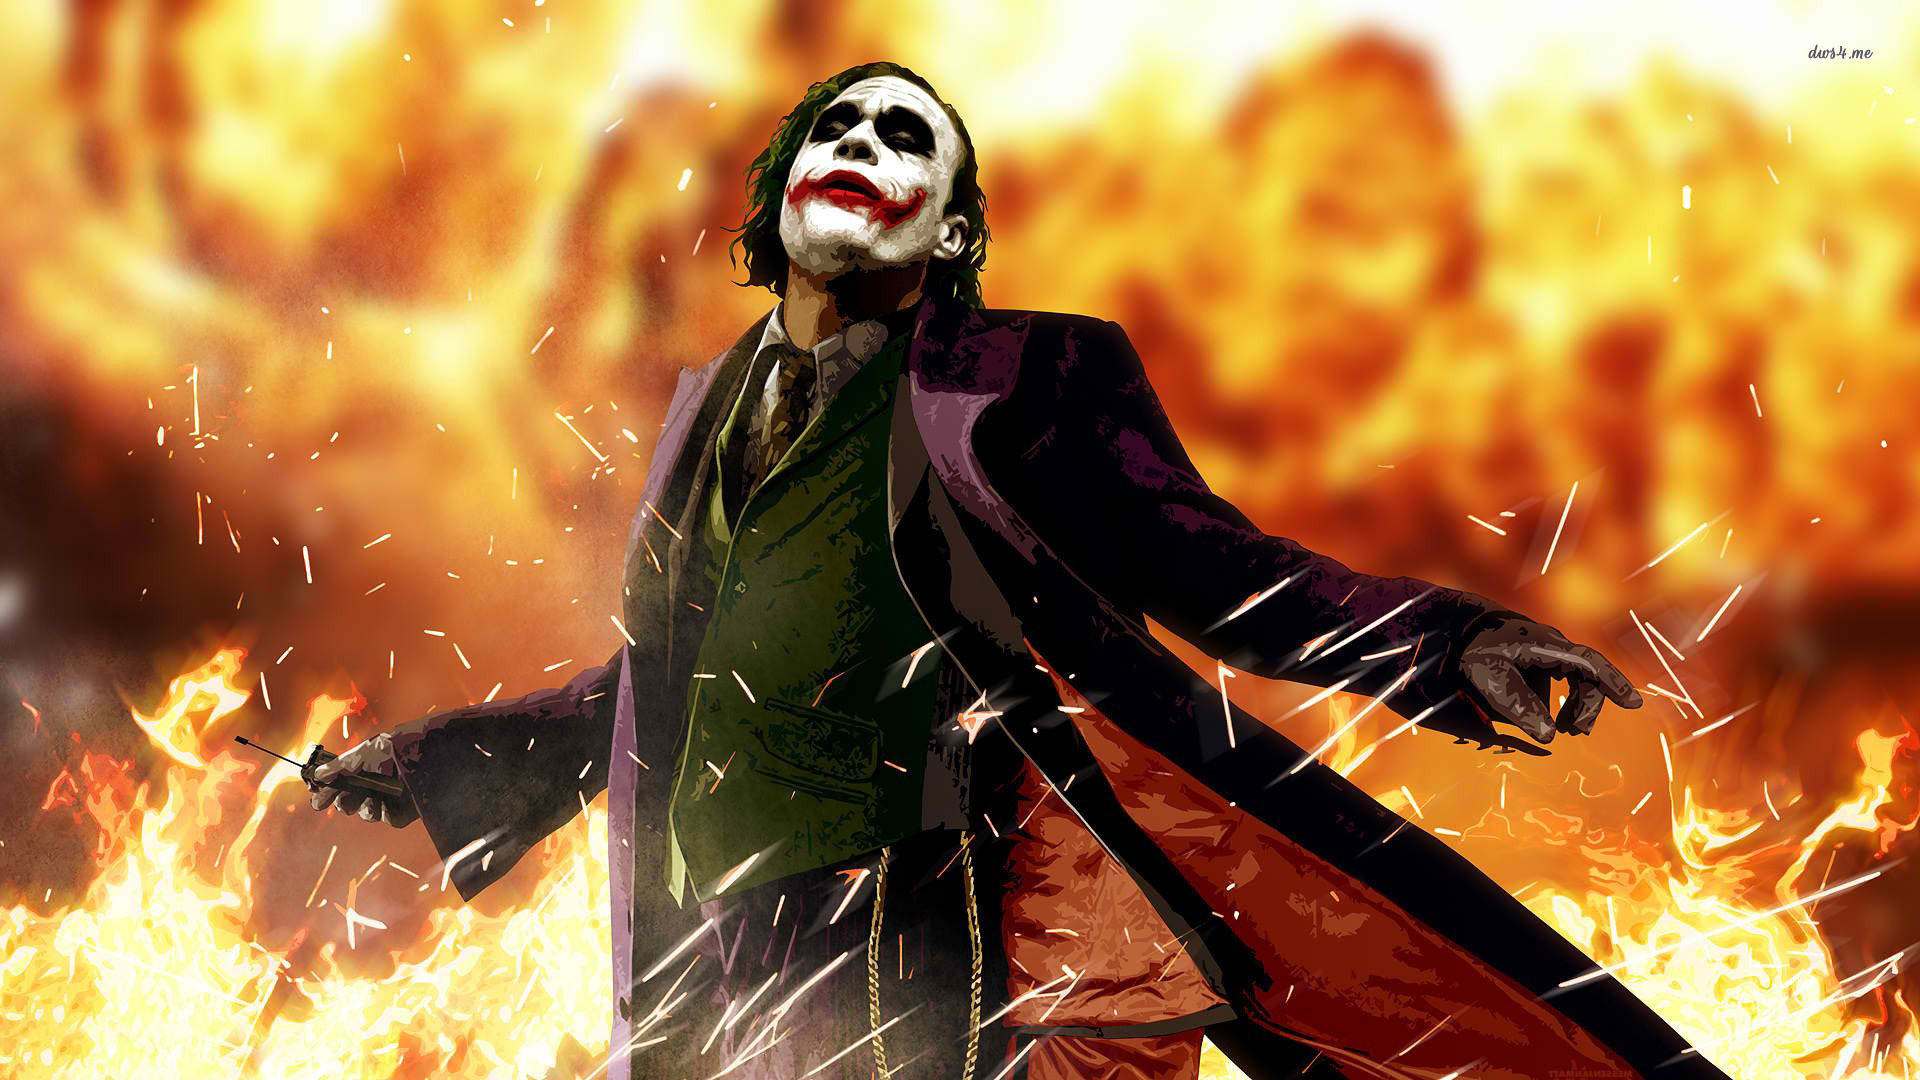 1920x1080 Batman Movie Wallpaper - Joker The Dark Knight